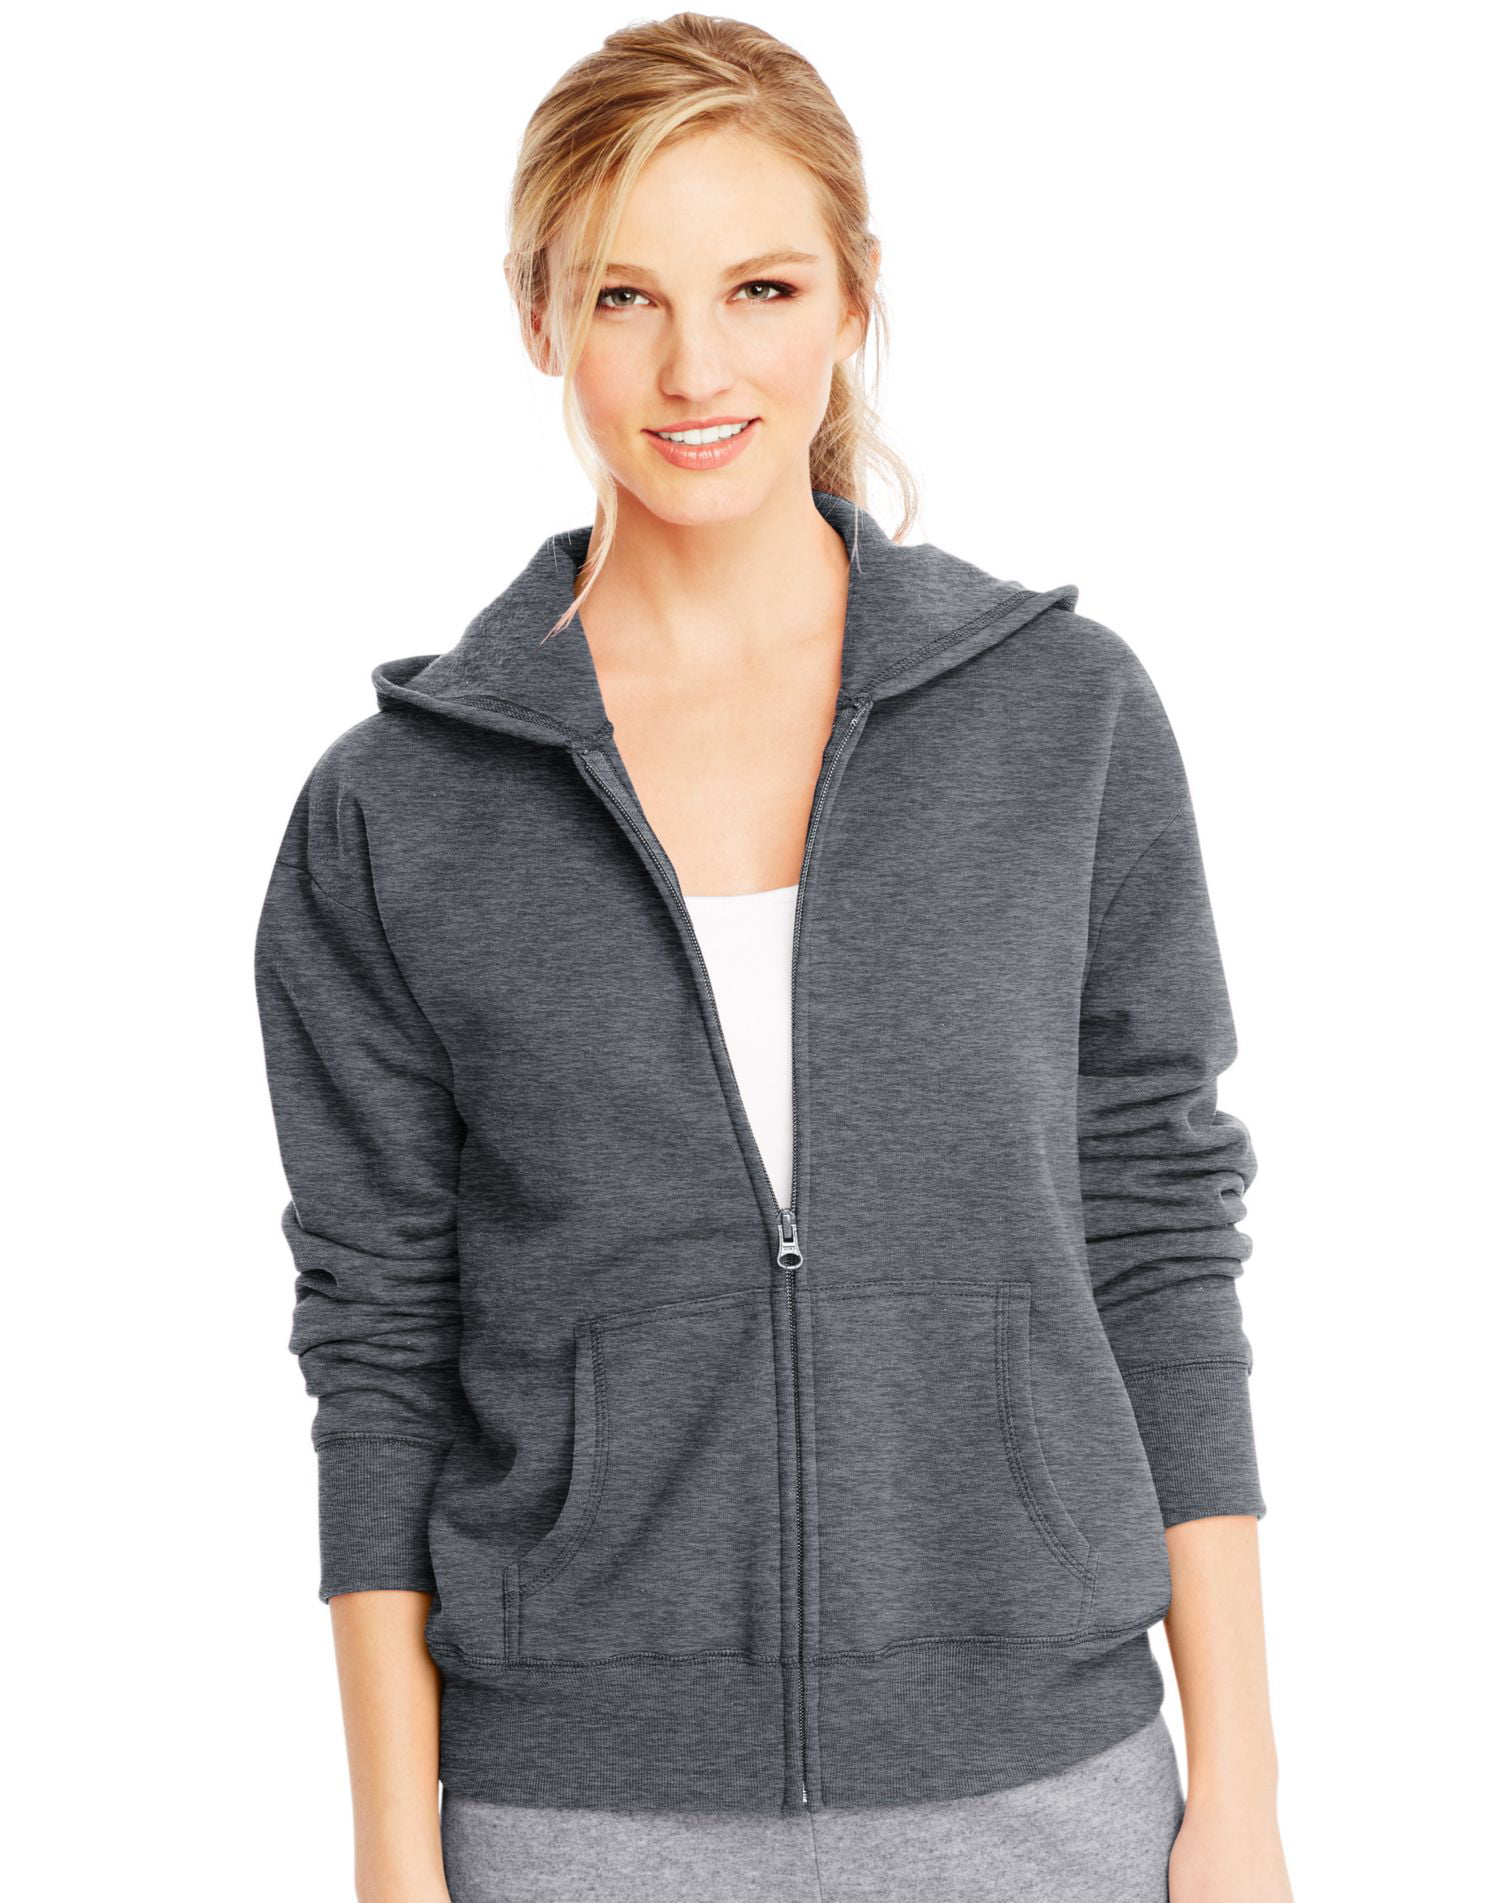 Hanes Womens  Zip Hoodie Sweatshirt  ComfortSoft  EcoSmart Slate Gra NWOT Medium 